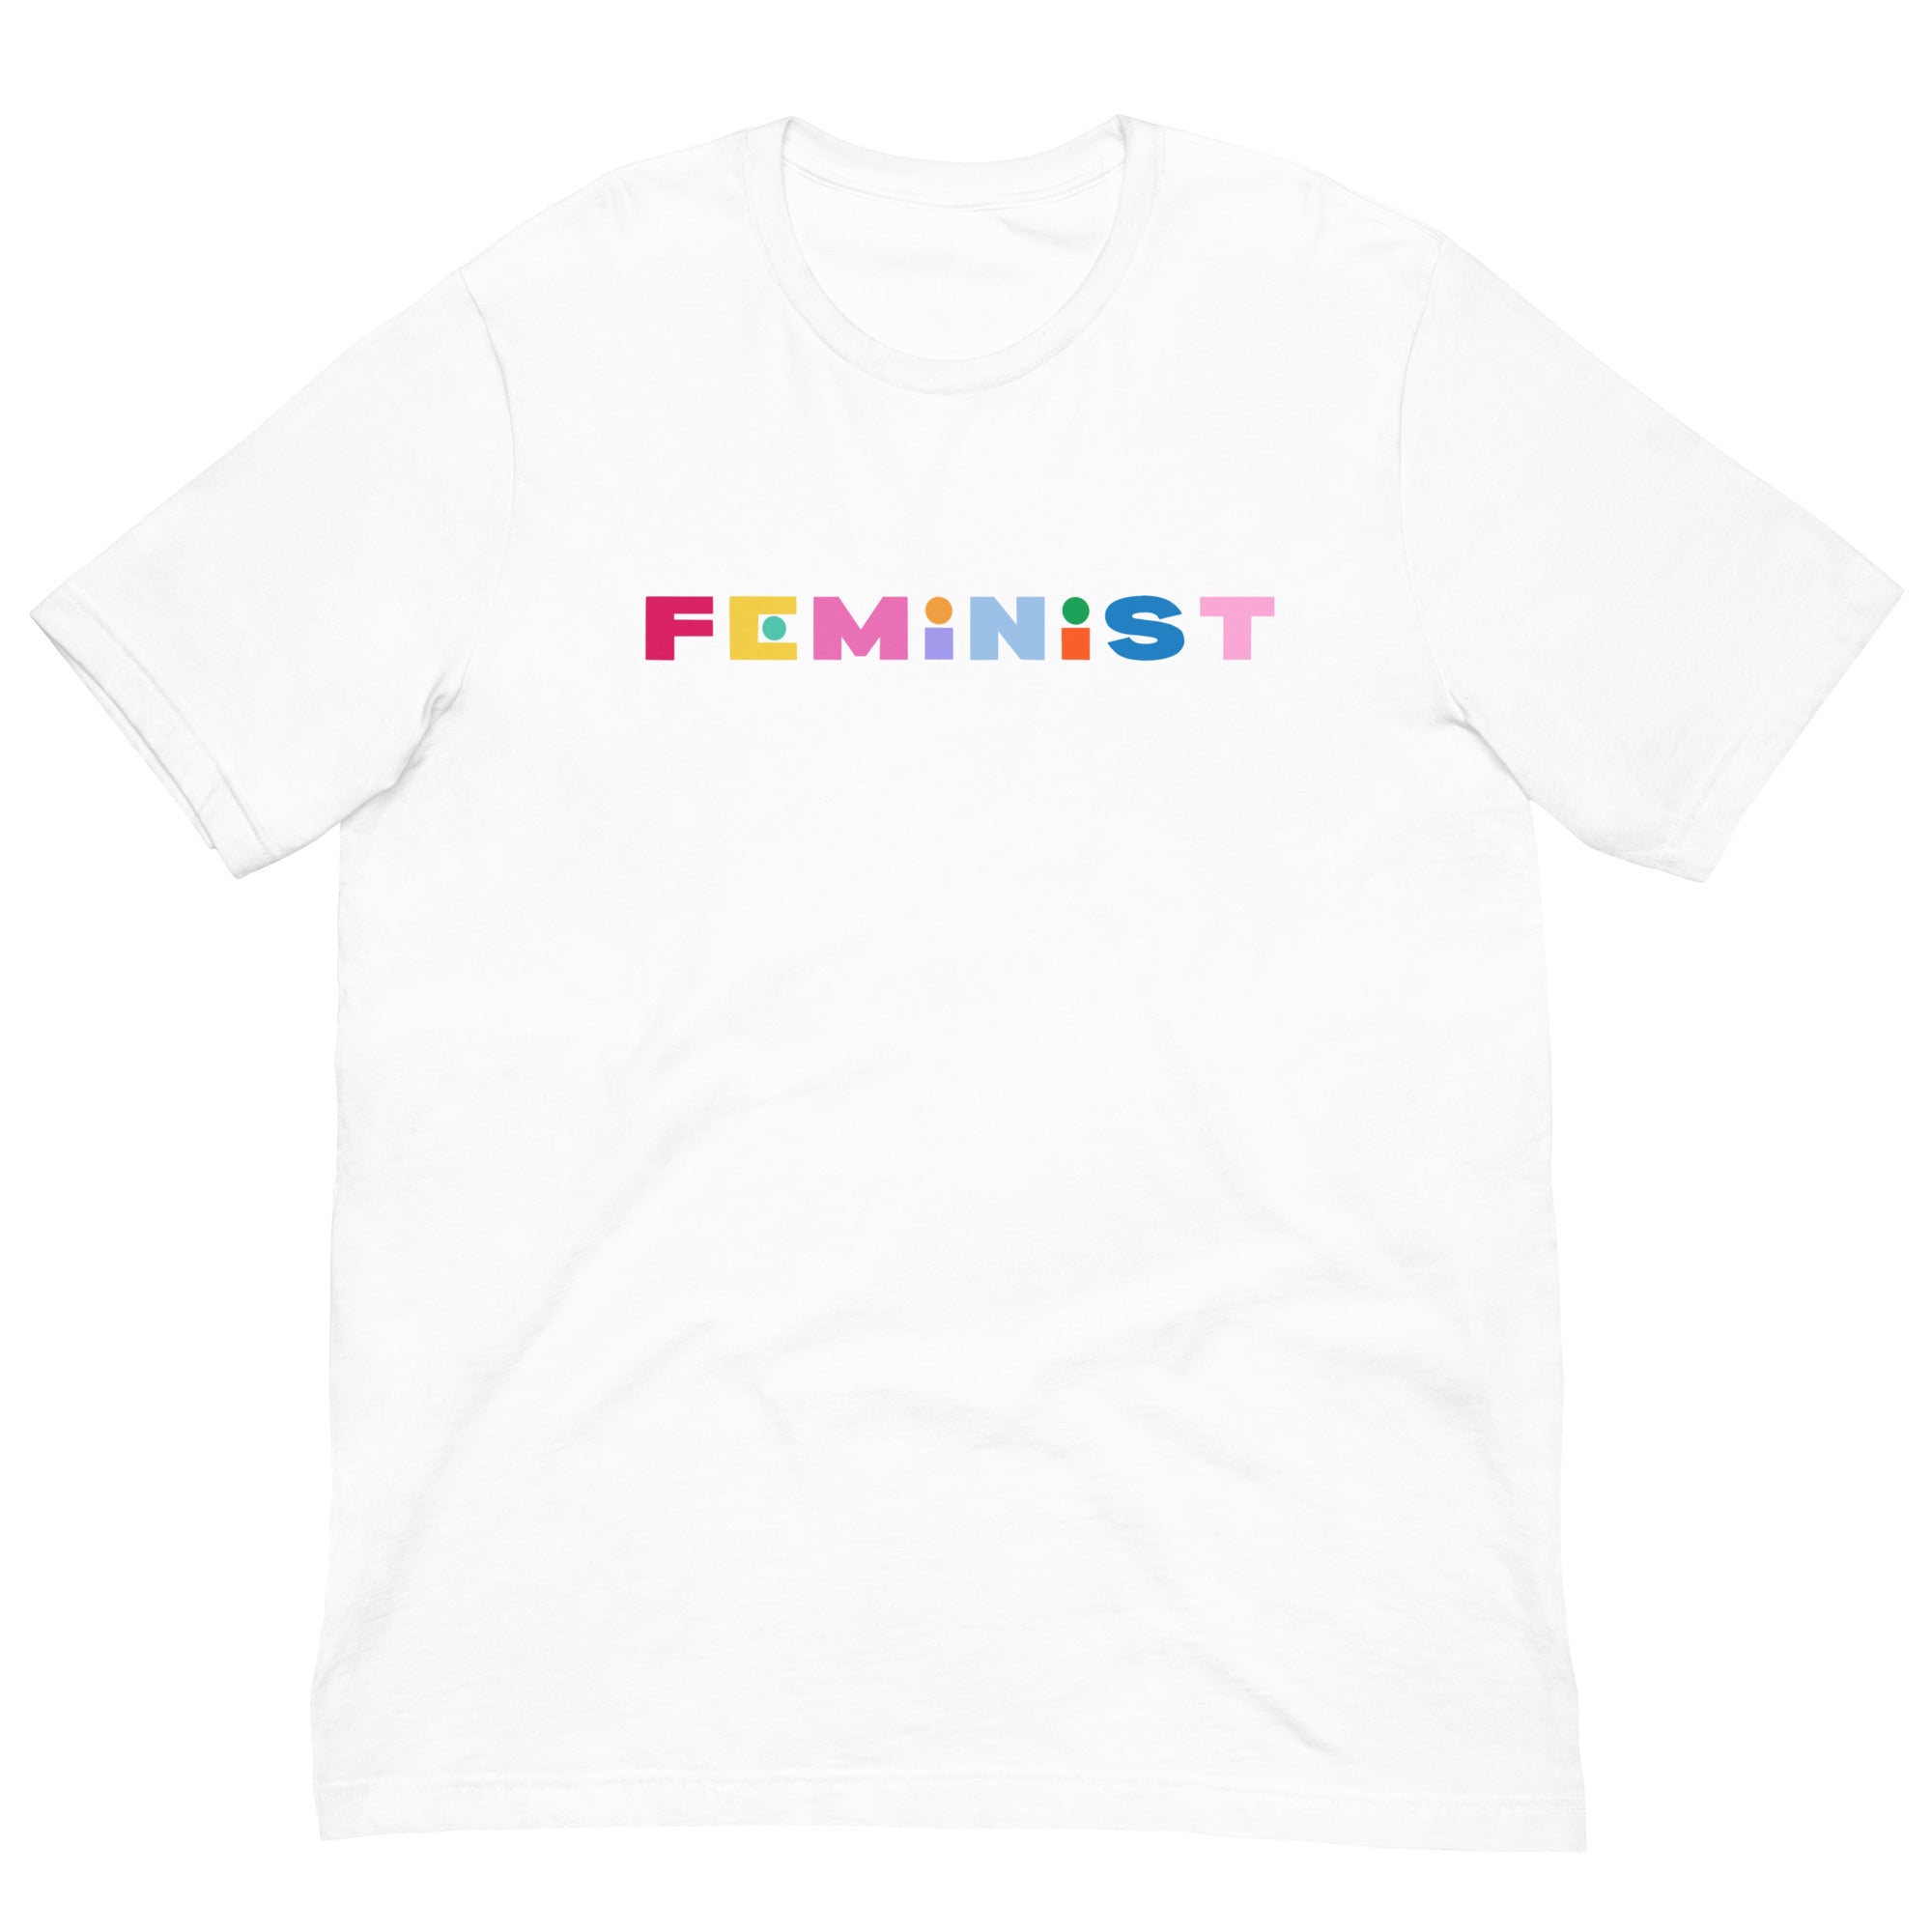 Feminist Unisex t-shirt - Shop Women’s Rights T-shirts - Feminist Trash Store - White